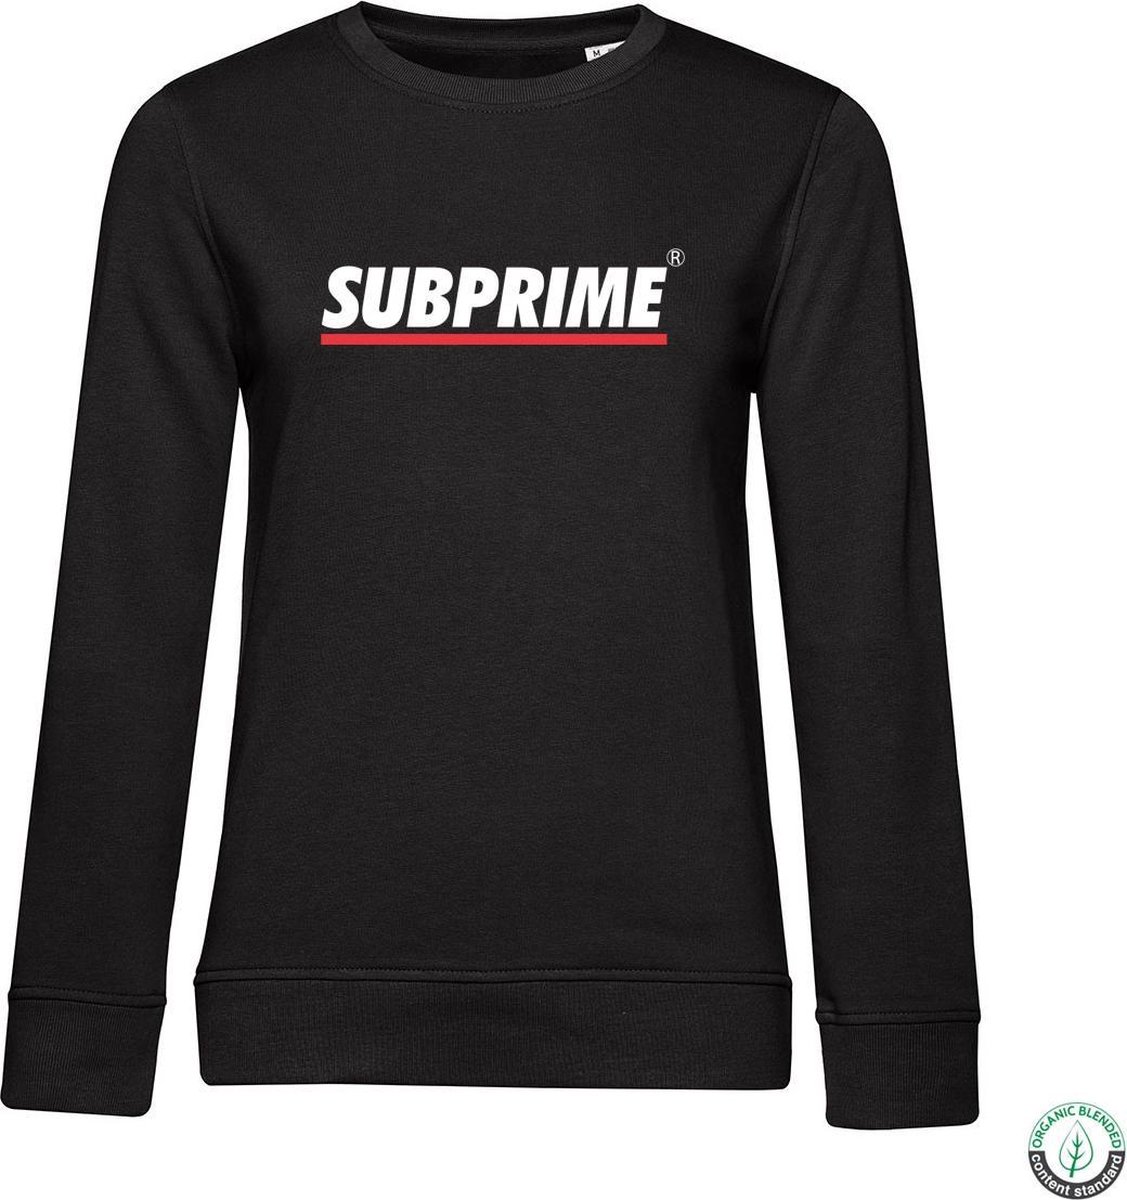 Subprime - Dames Sweaters Sweater Stripe Black - Zwart - Maat S